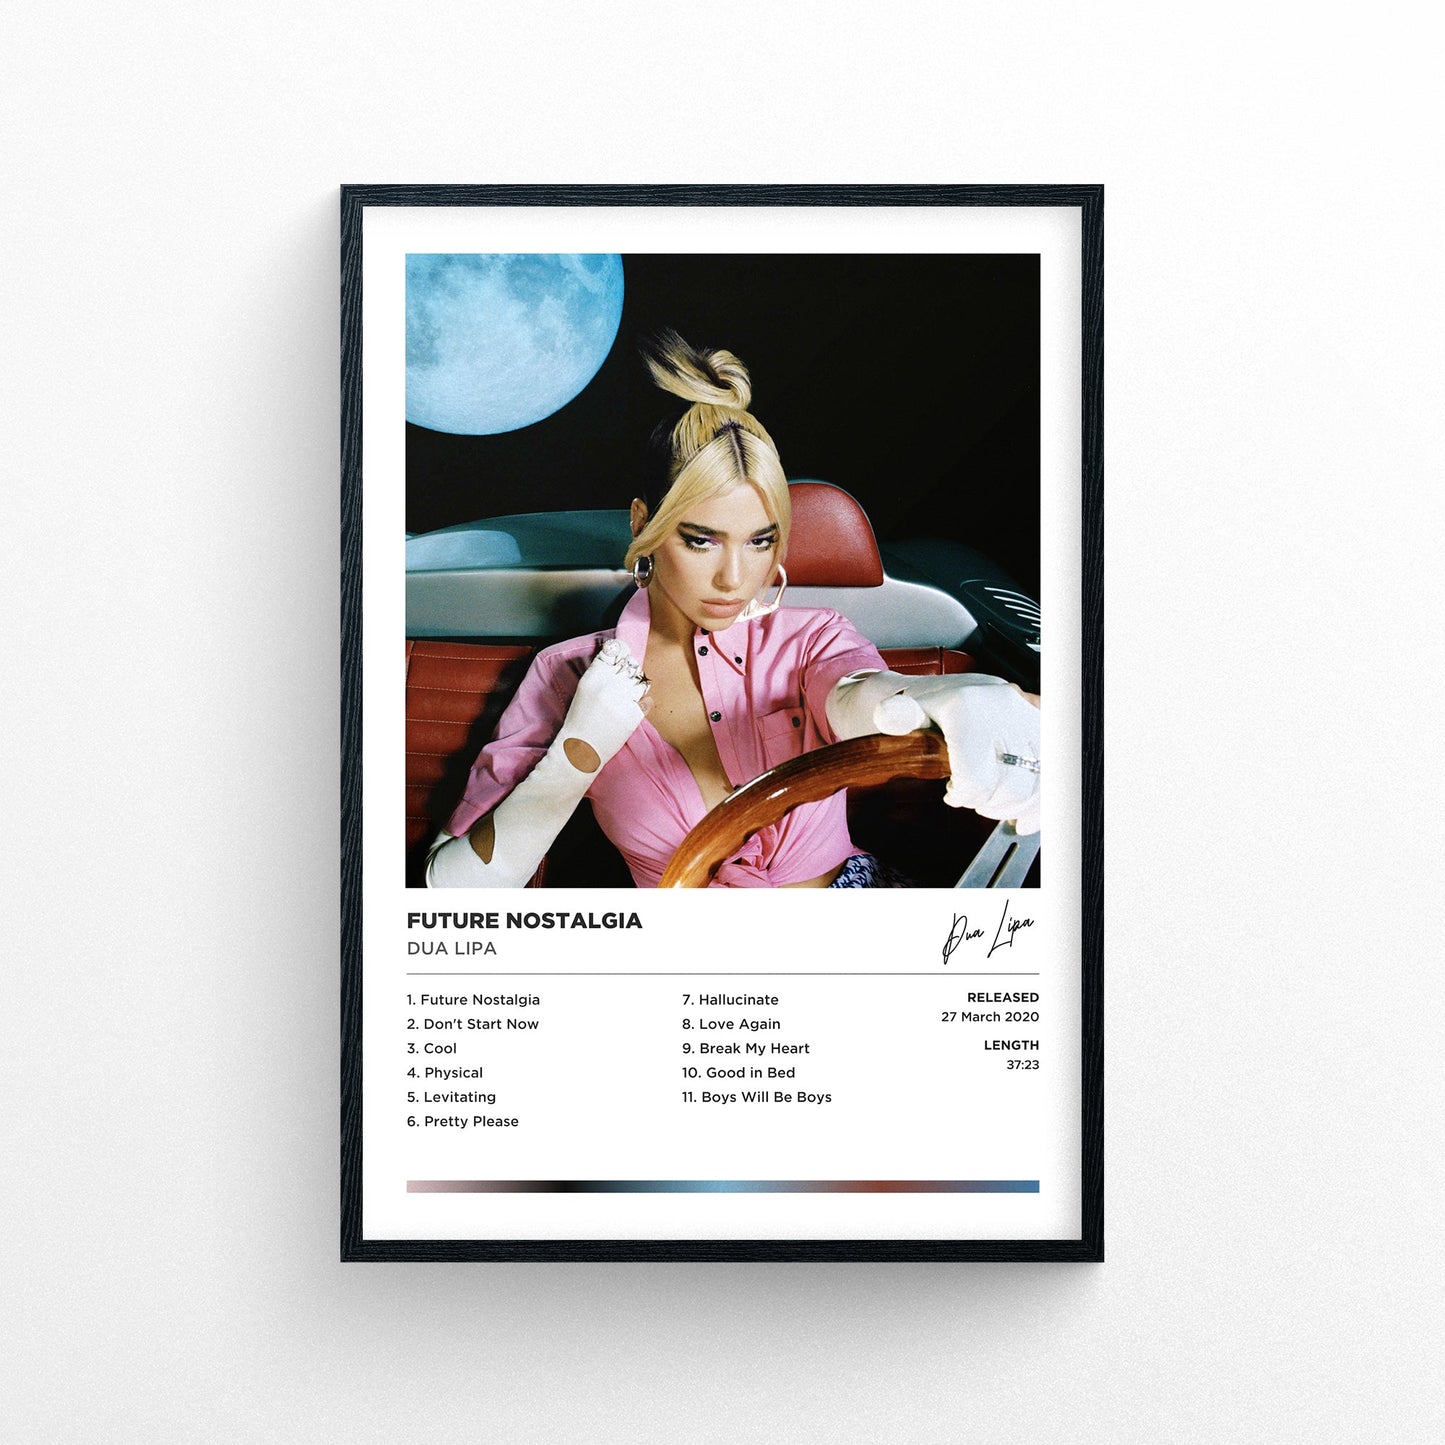 Dua Lipa - Future Nostalgia Framed Poster Print | Polaroid Style | Album Cover Artwork